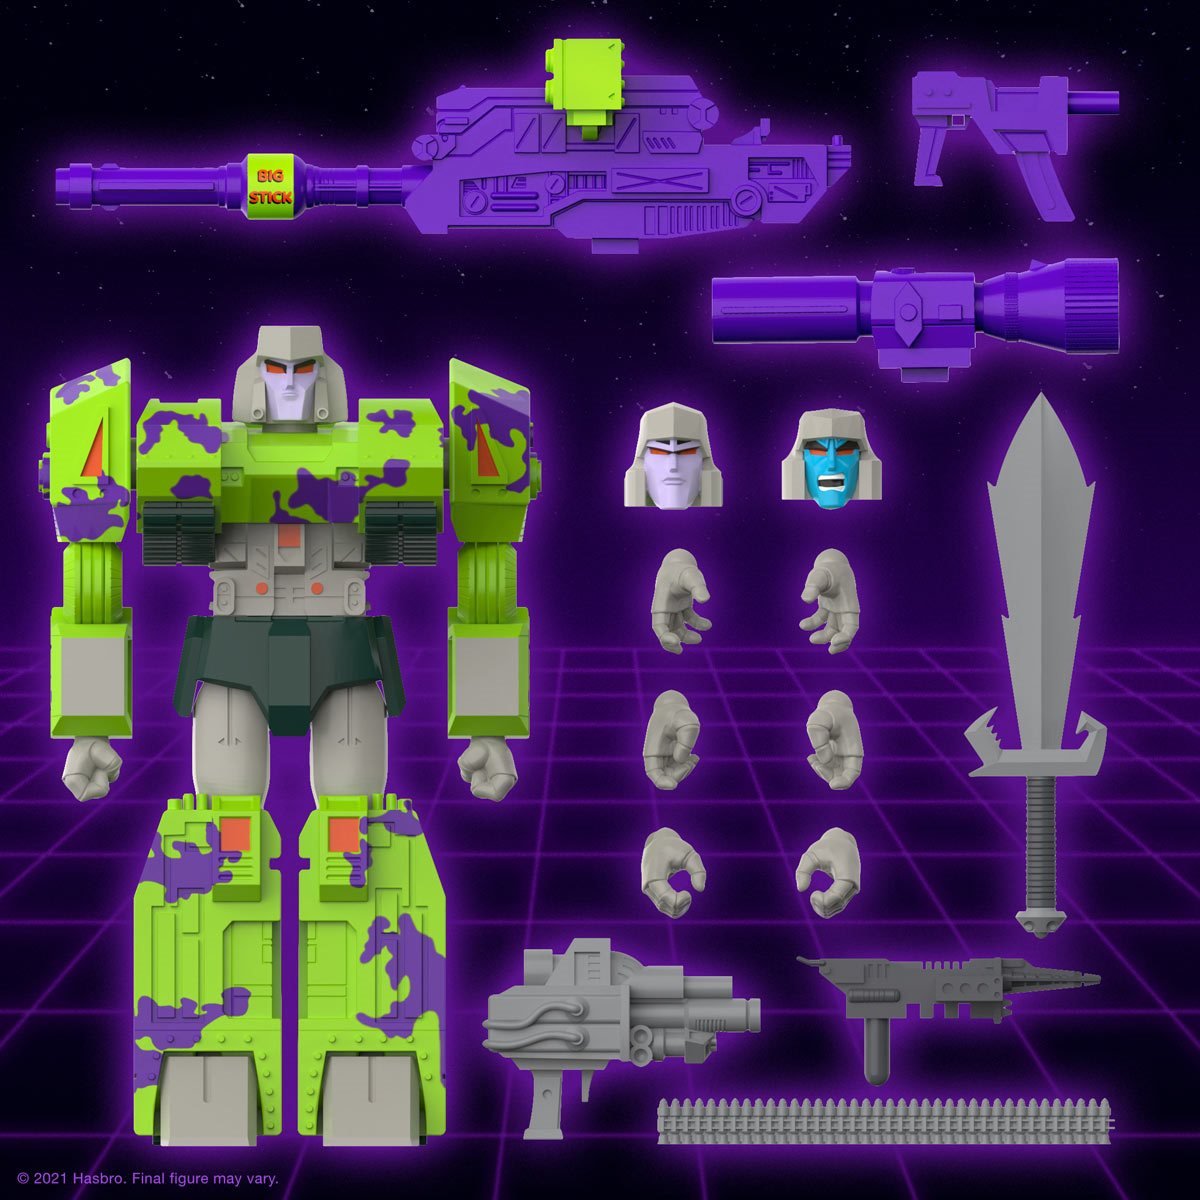 Super7 Transformers Ultimates Megatron (G2) 7-Inch Action Figure